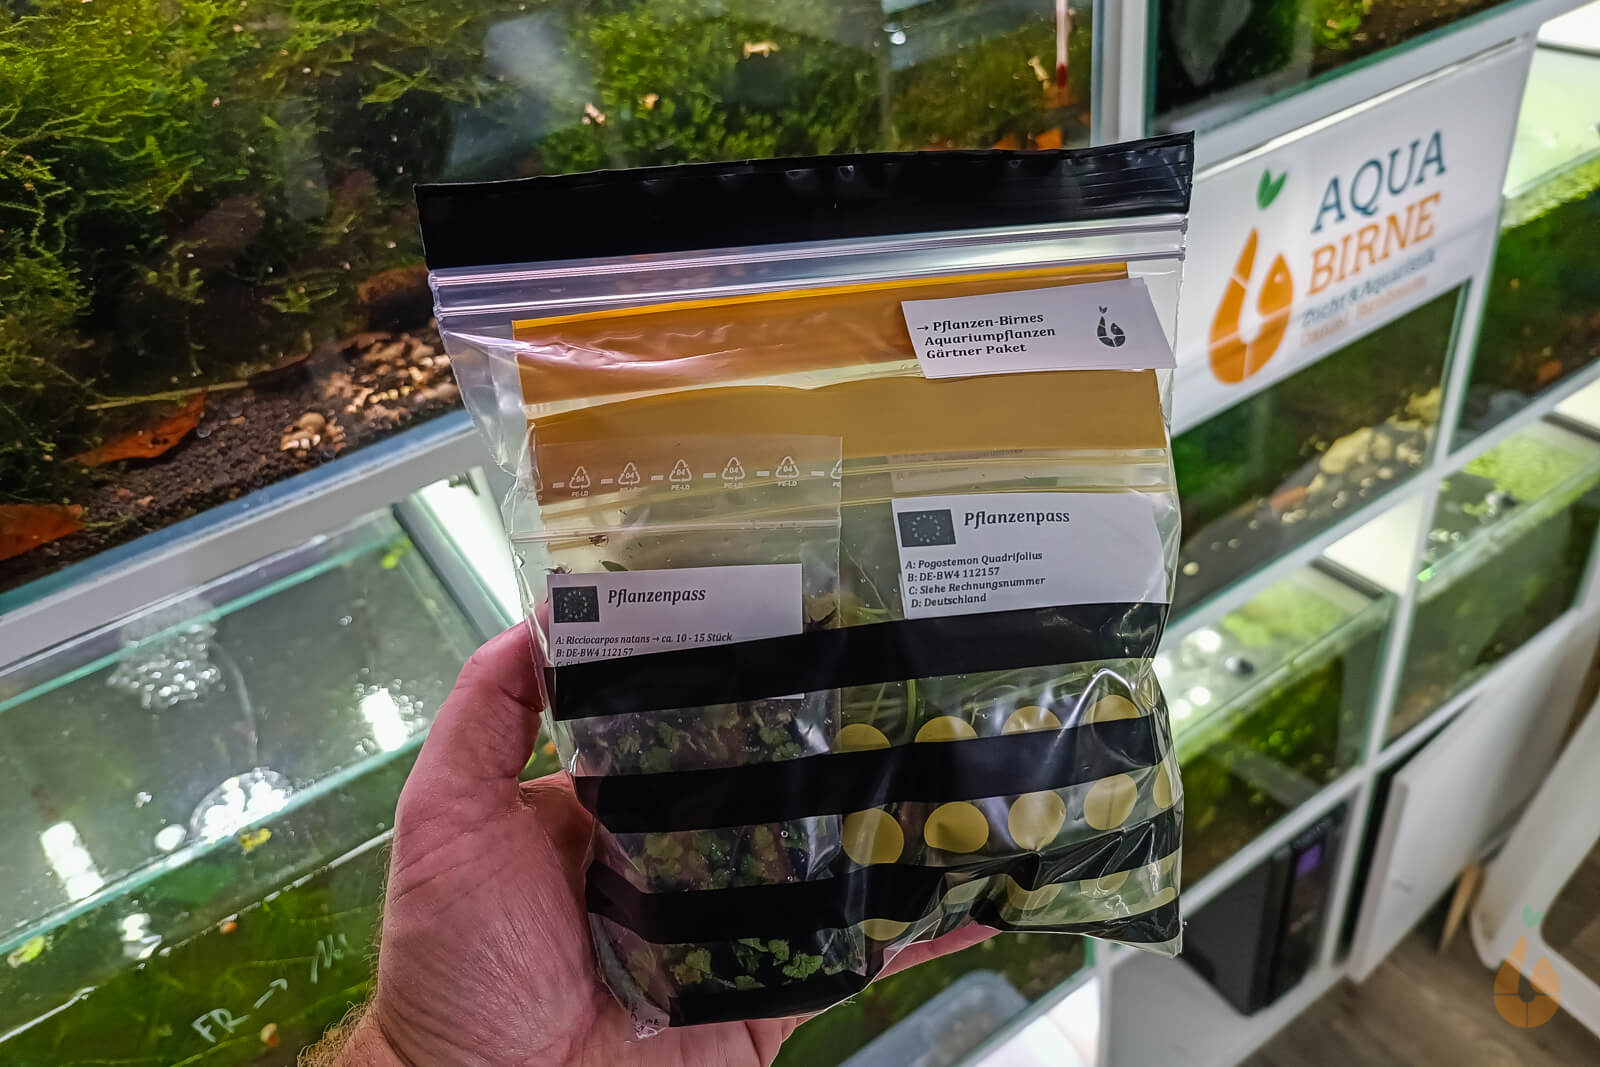 Pflanzen-Birnes überraschungs Aquariumpflanzen Gärtner Paket | Rückschnitt